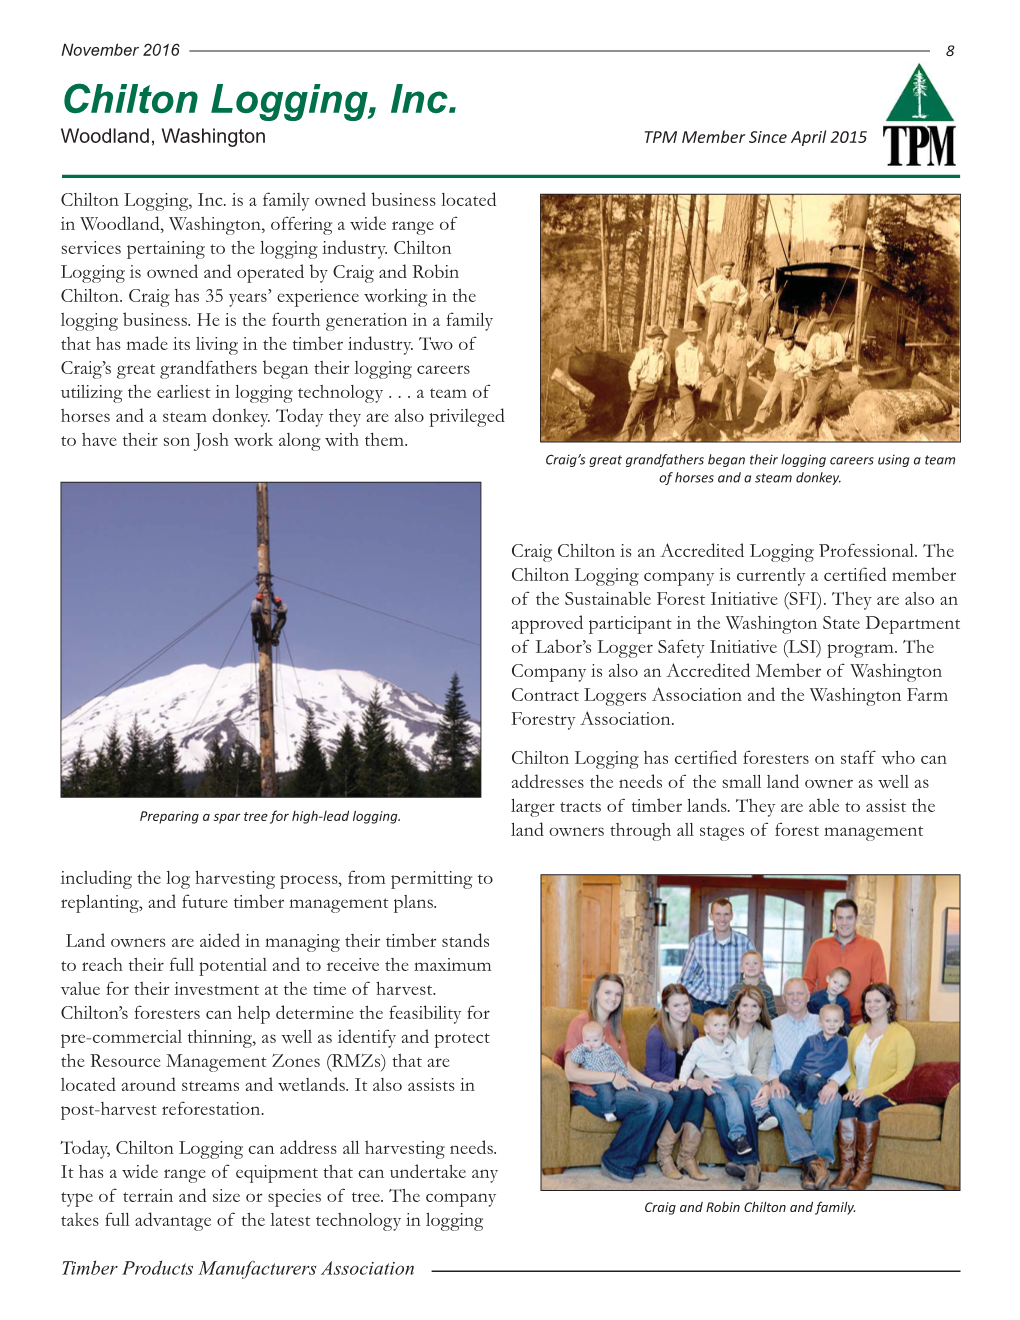 Chilton Logging, Inc. Woodland, Washington TPM Member Since April 2015